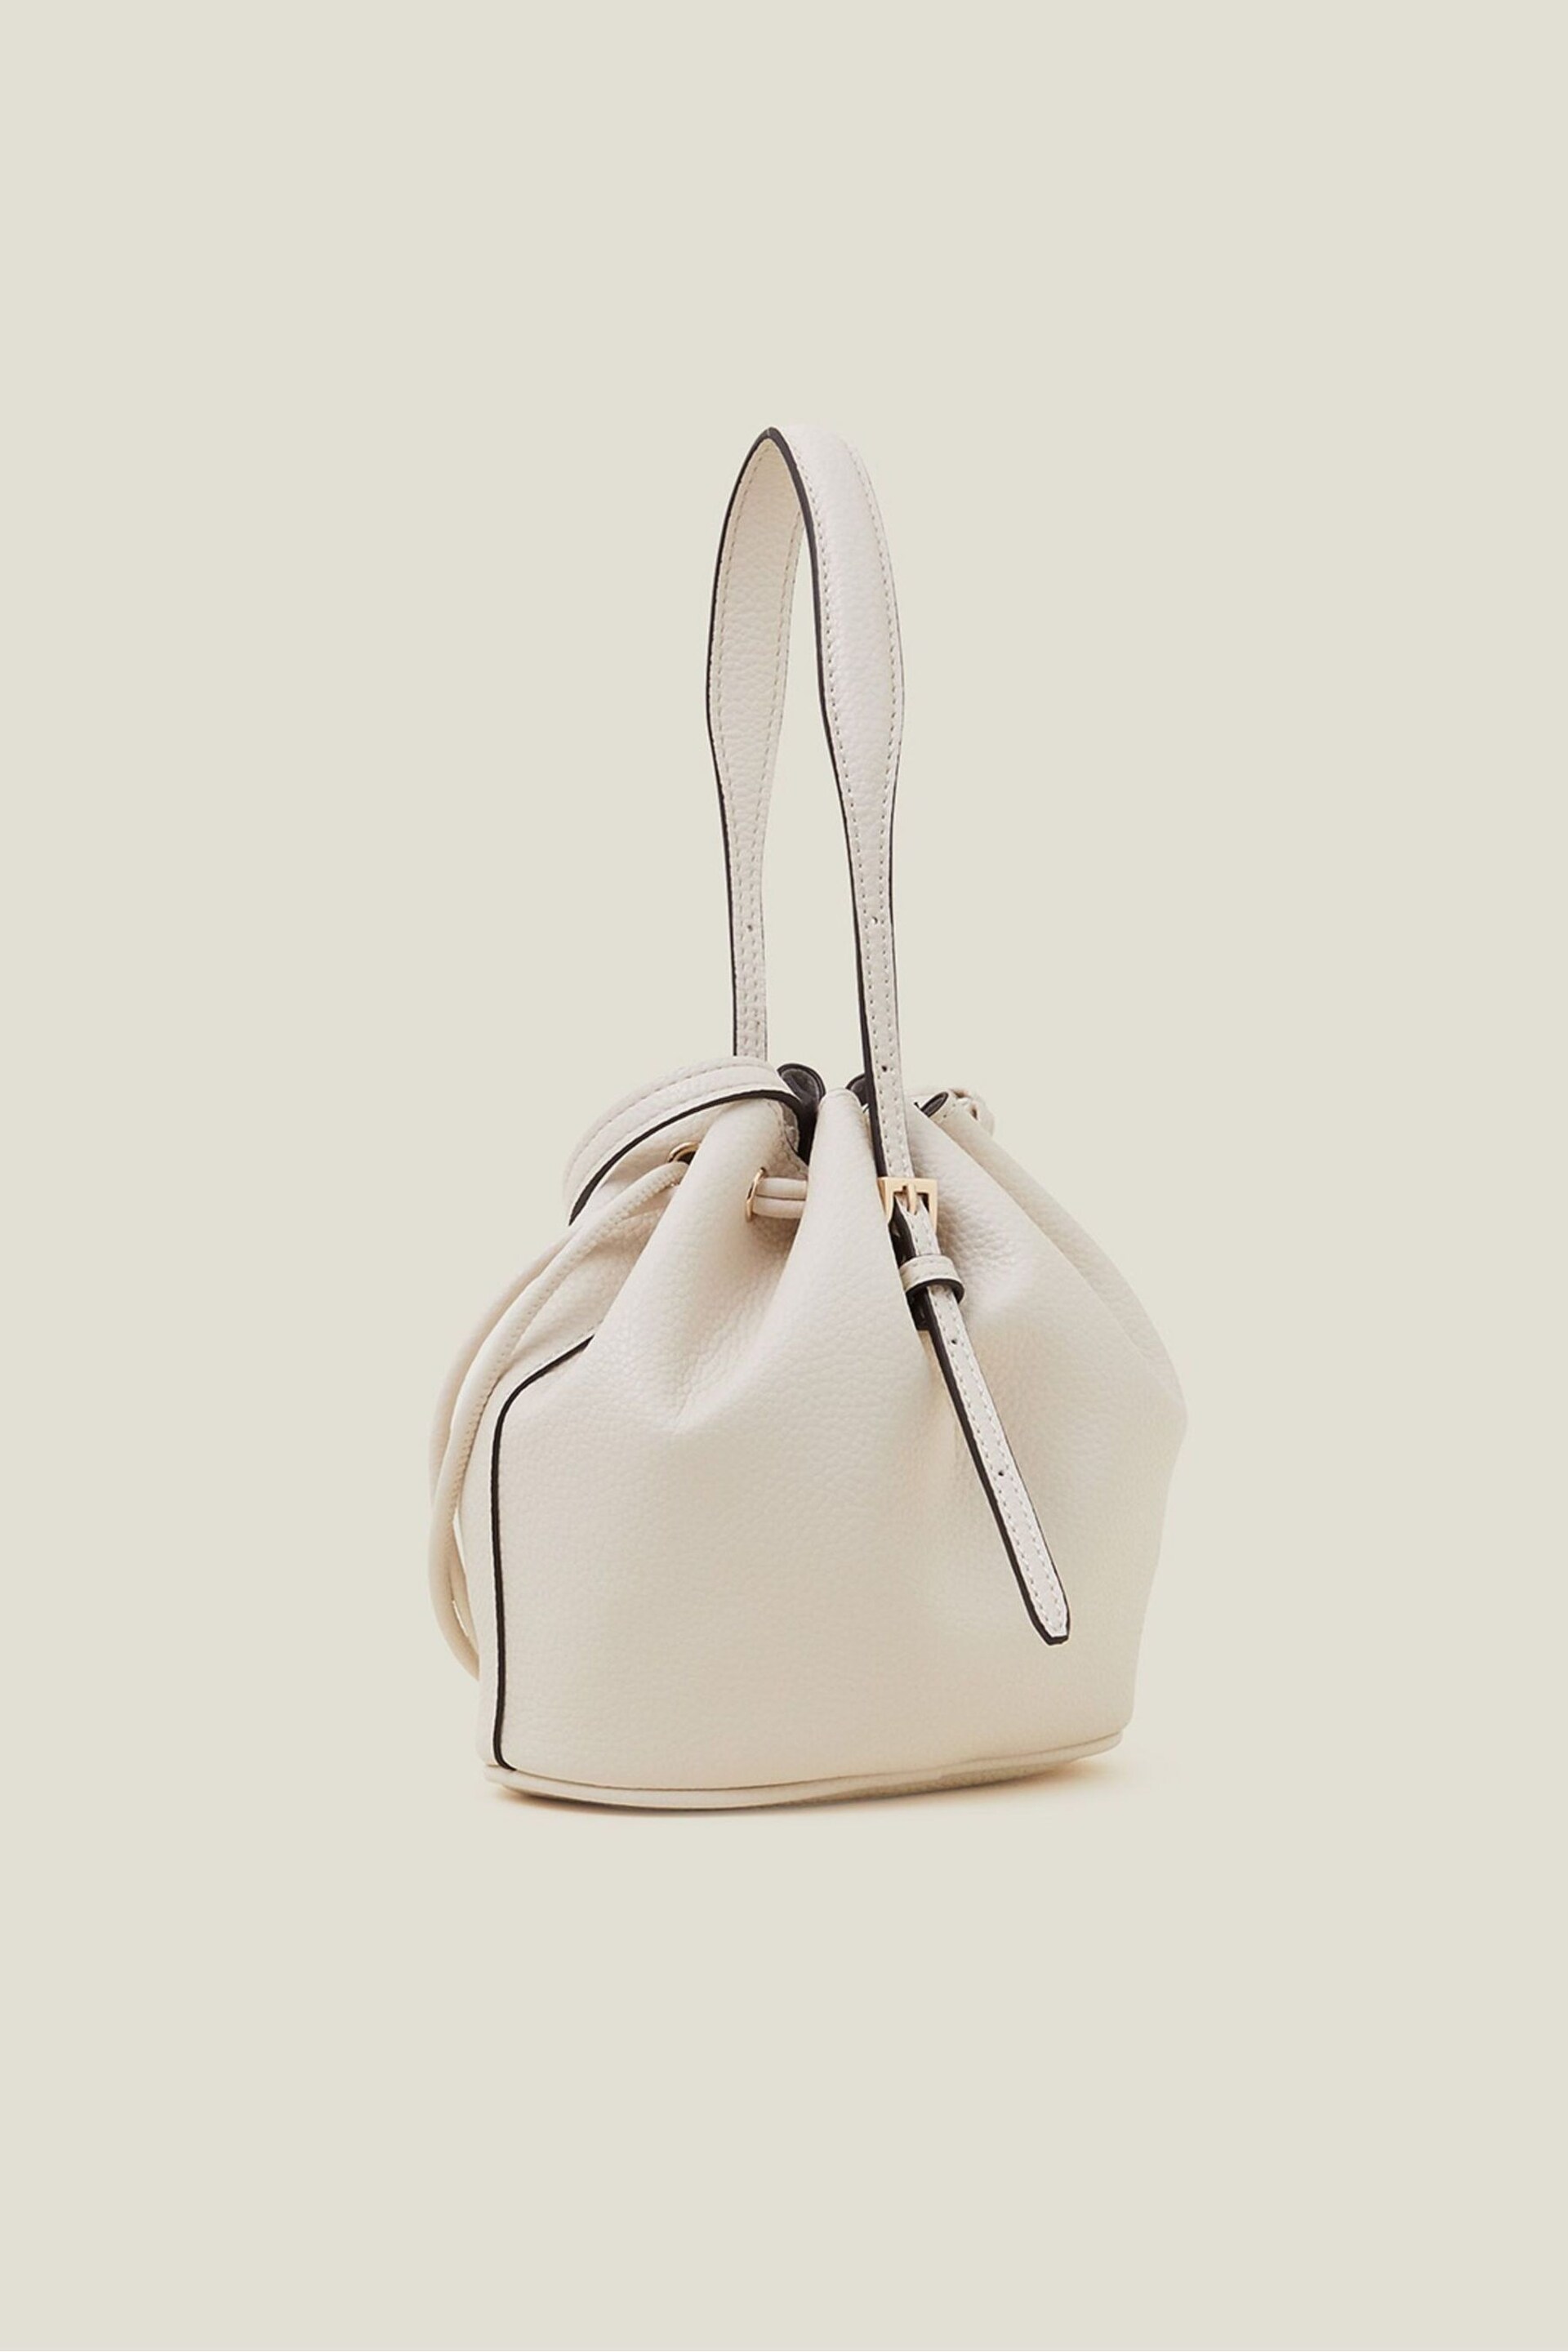 Accessorize Cream Mini Duffle Bag - Image 3 of 3